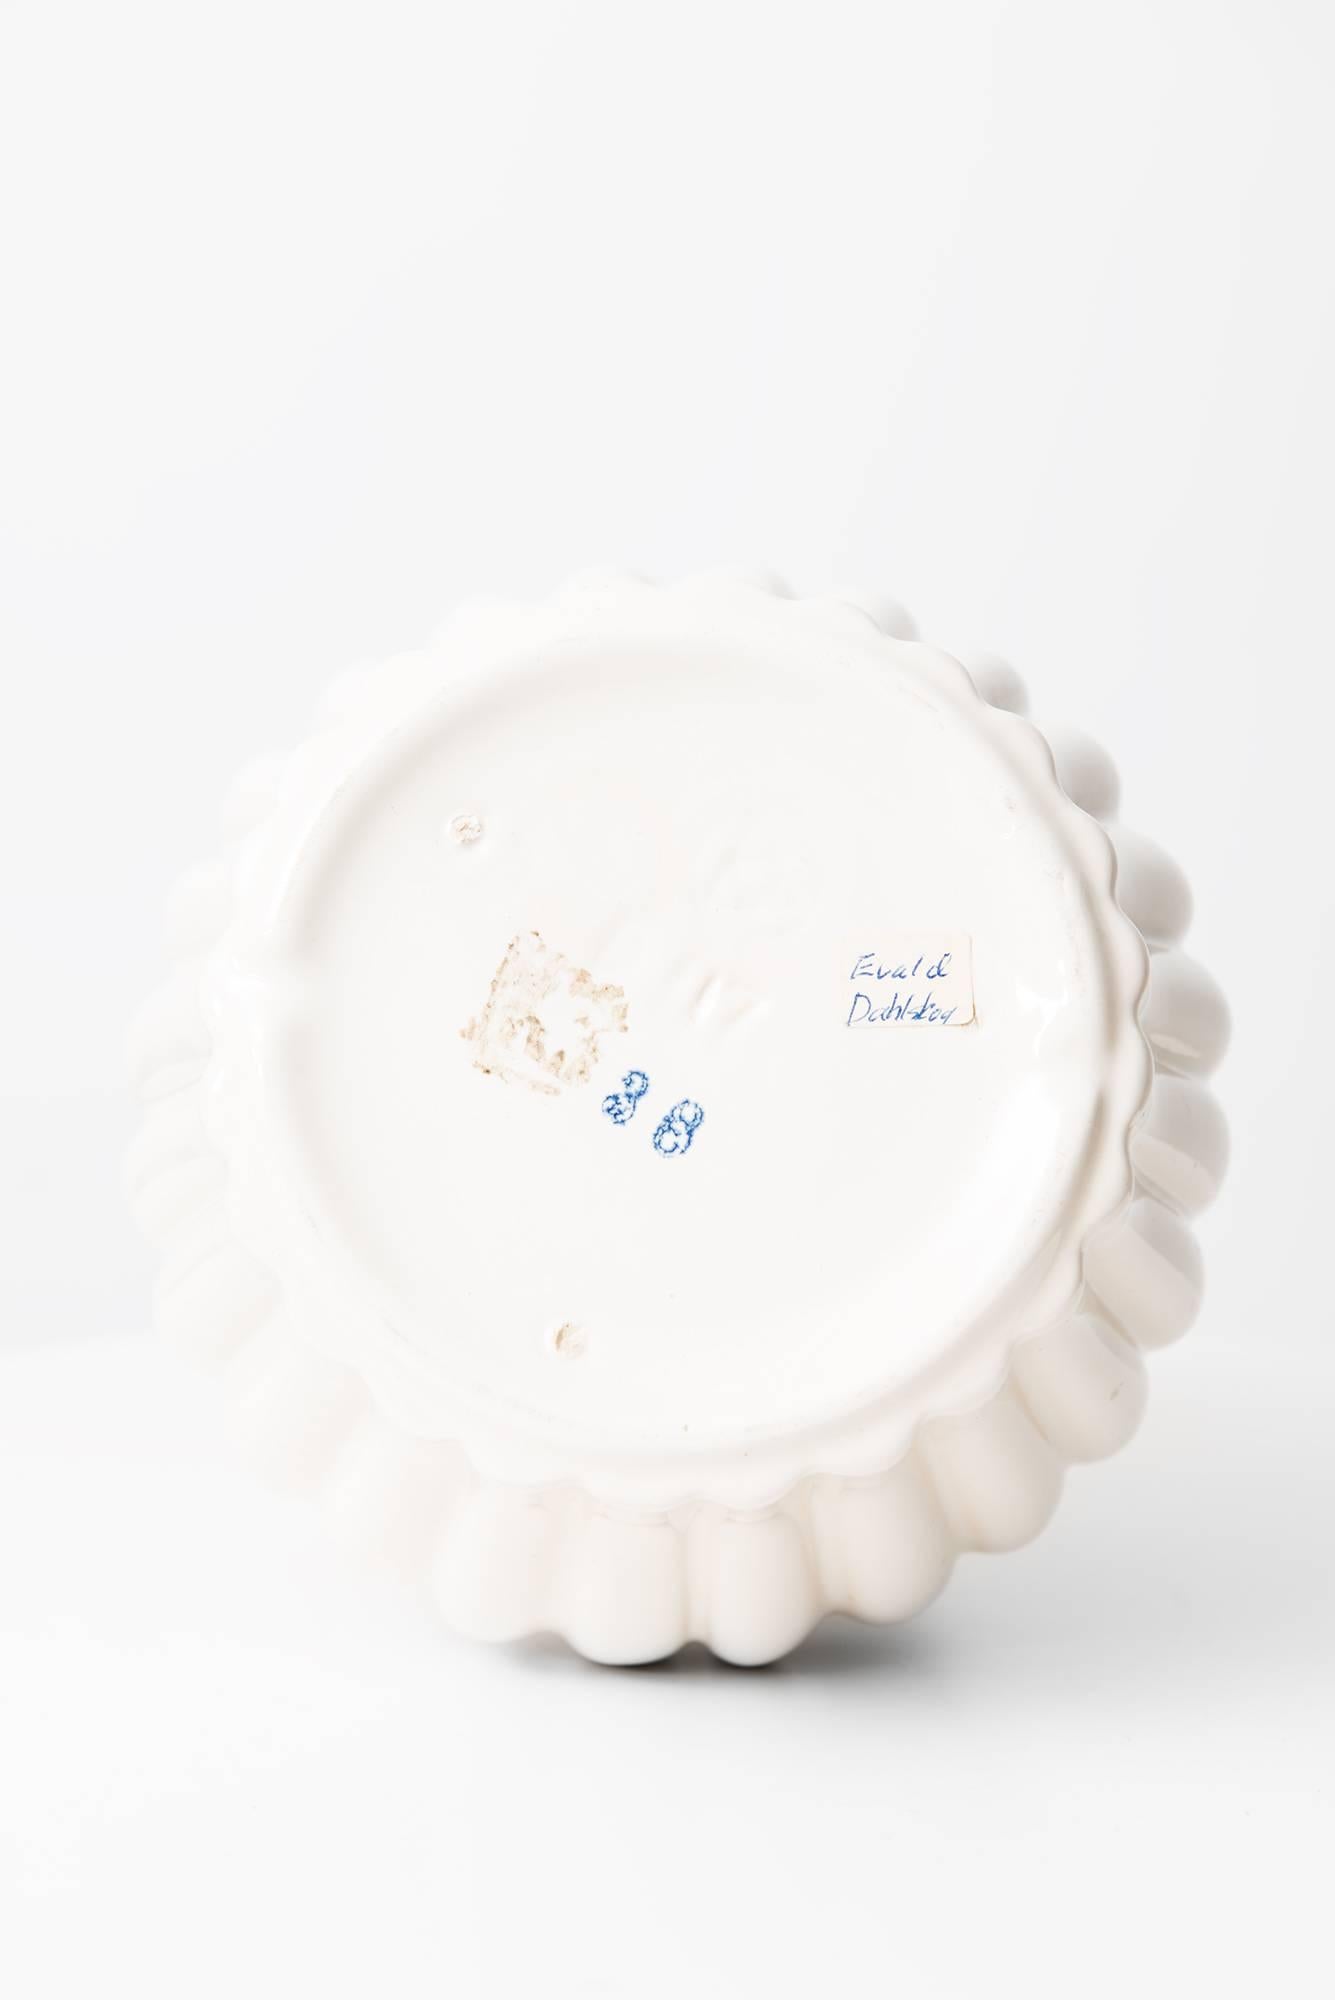 Swedish Ewald Dahlskog Glazed Ceramic Vase by Bobergs Fajansfabrik in Sweden